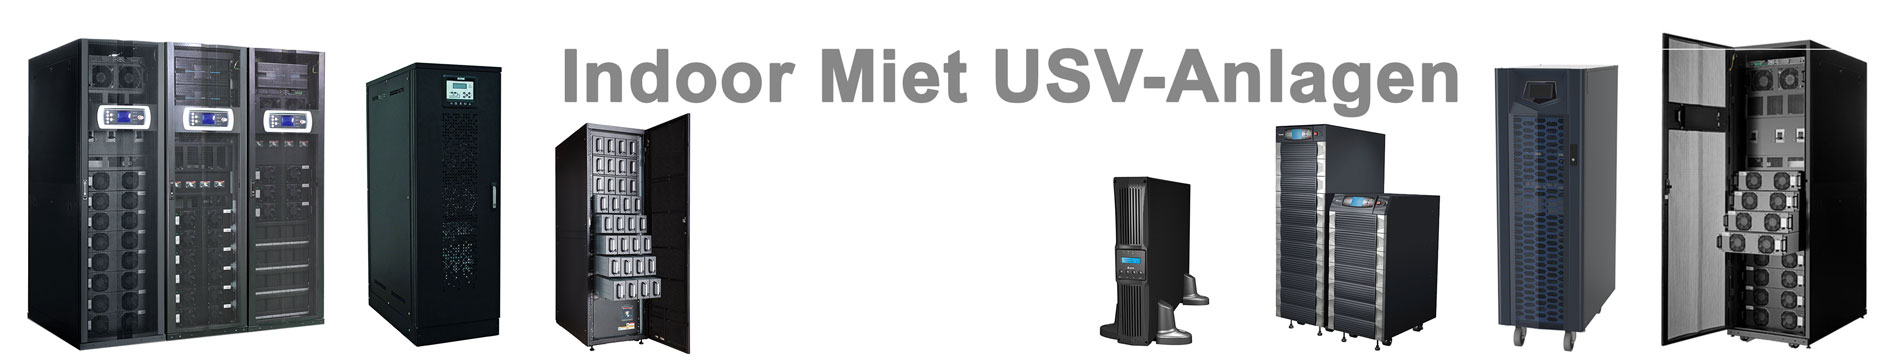 Miet-USV - ROTON PowerSystems GmbH 